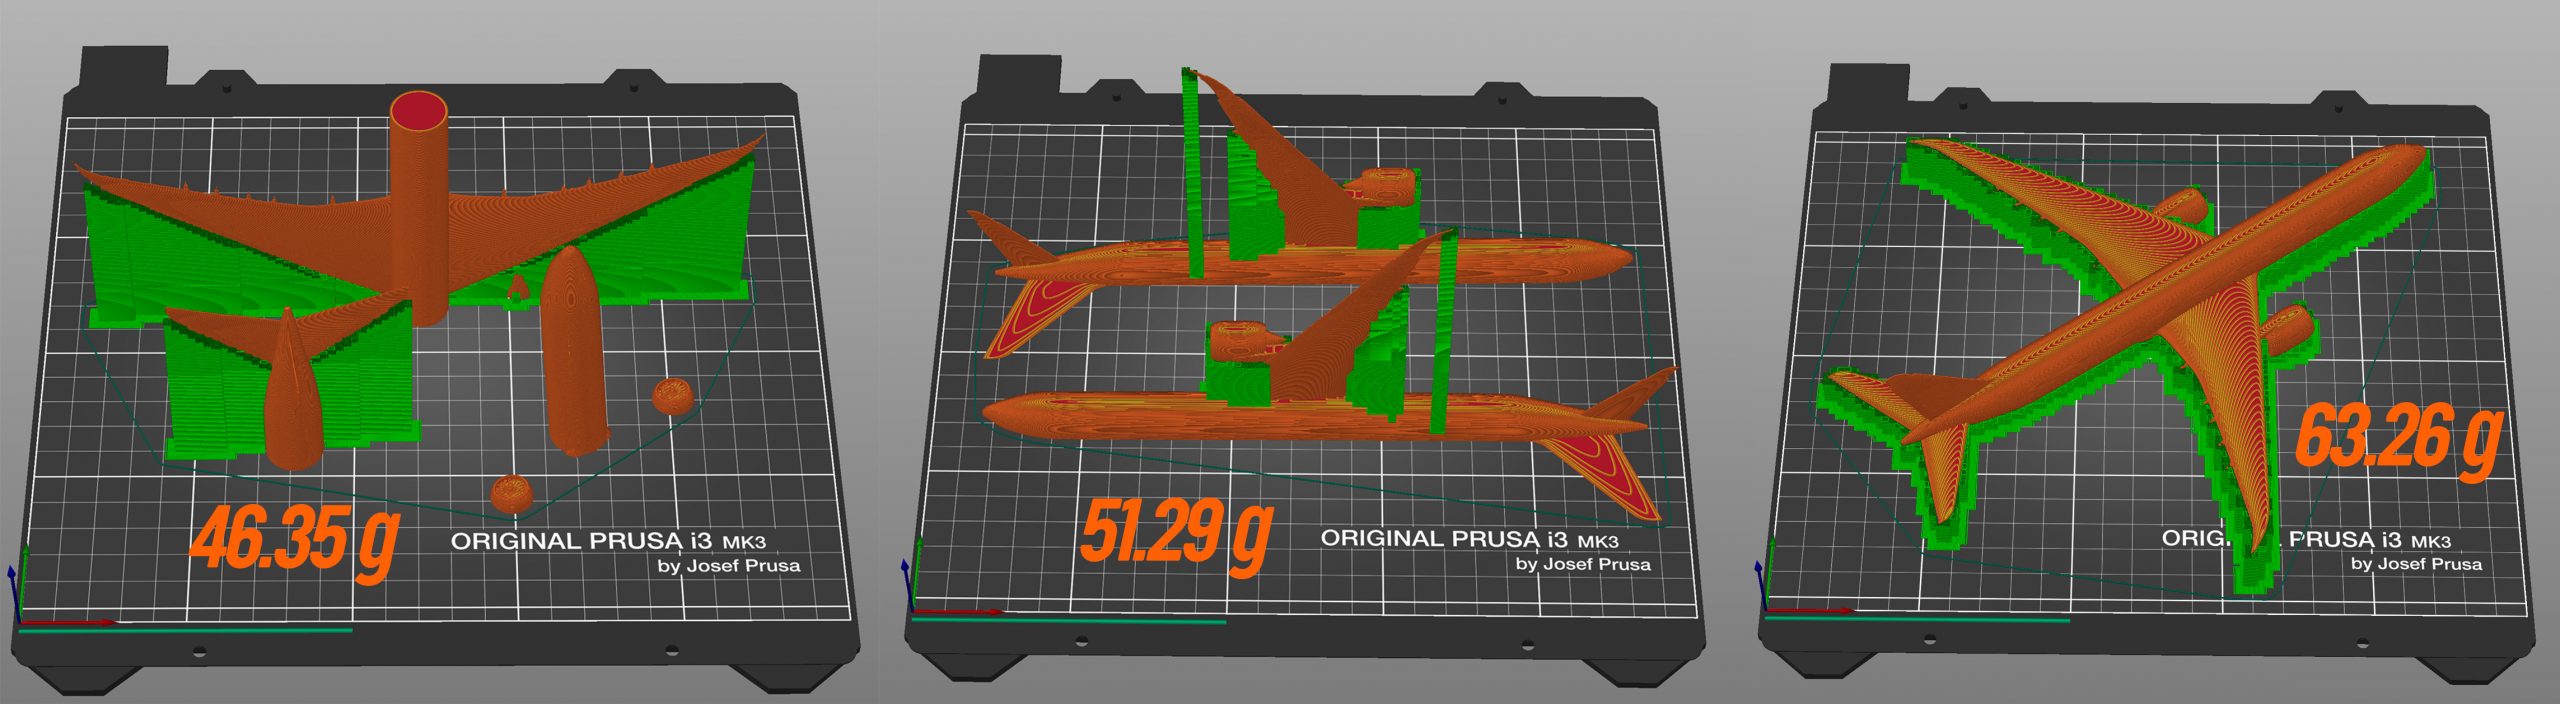 How to print with flexible filament - Original Prusa 3D Printers